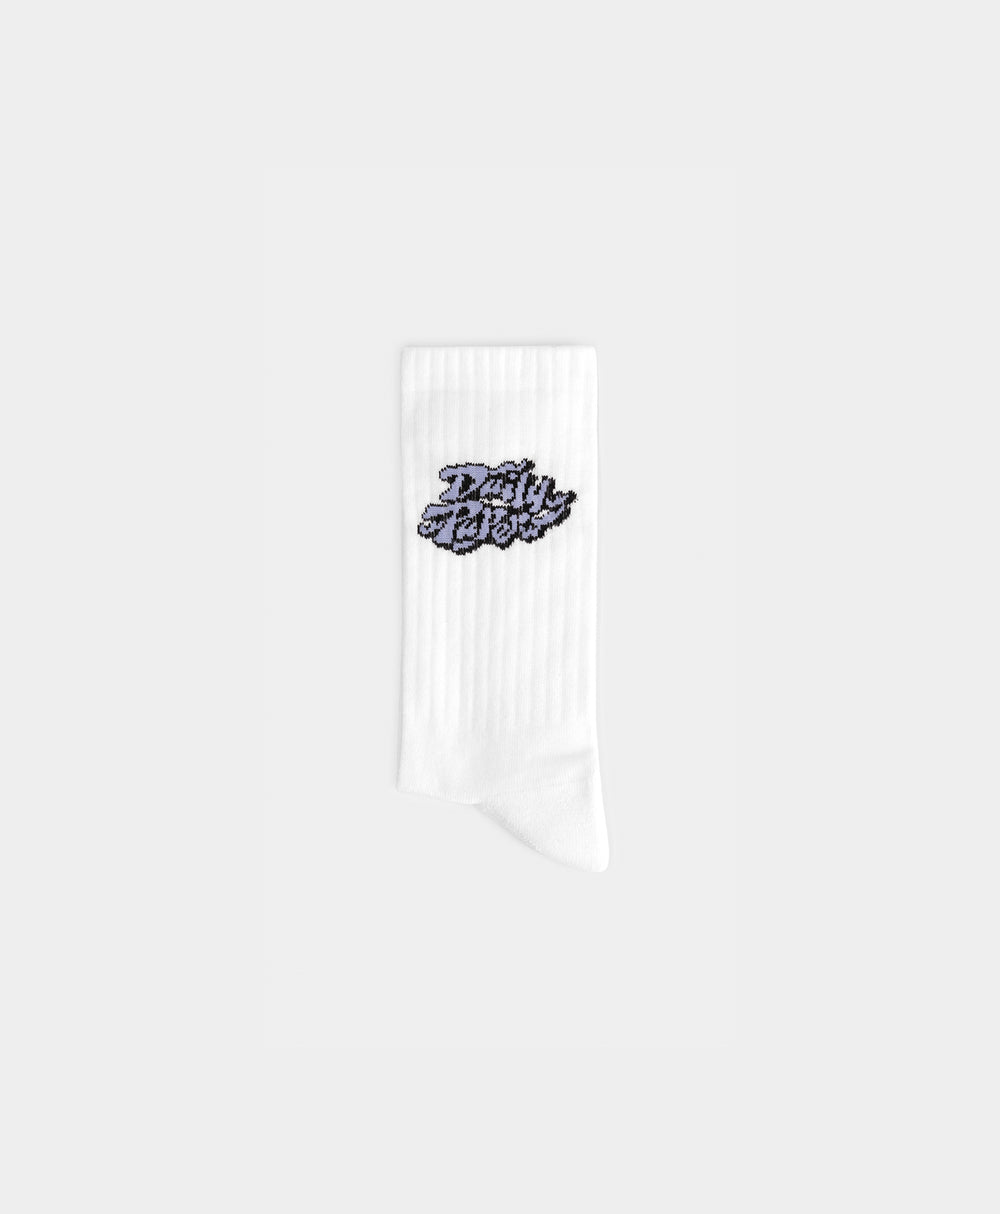 DP - White Pir Socks - Packshot - Rear